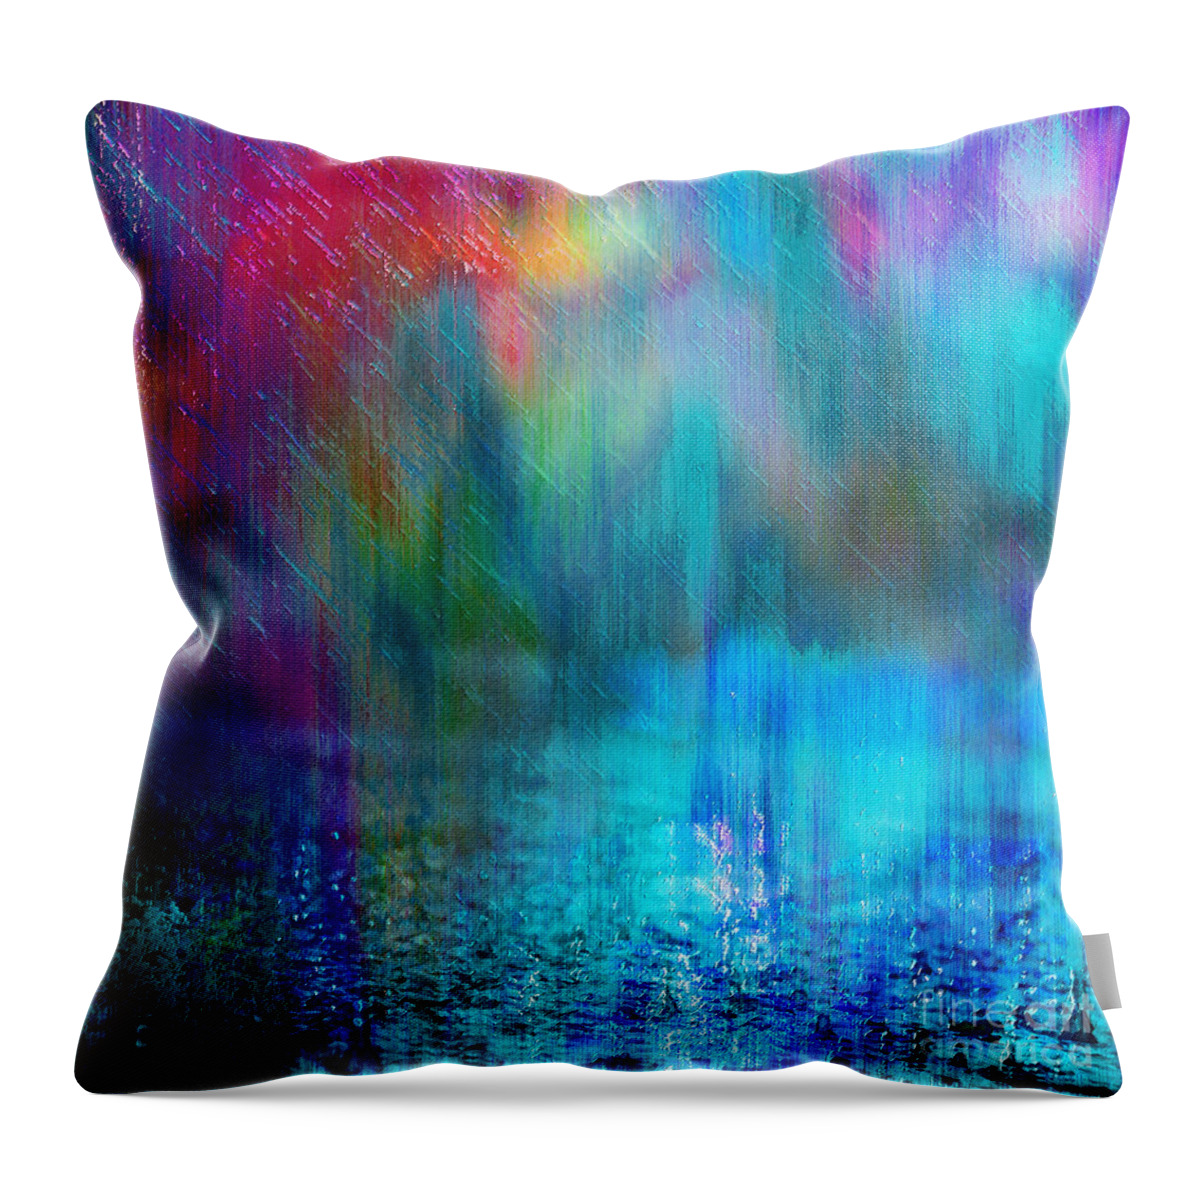 Abstract Throw Pillow featuring the digital art Summer Rain by Klara Acel